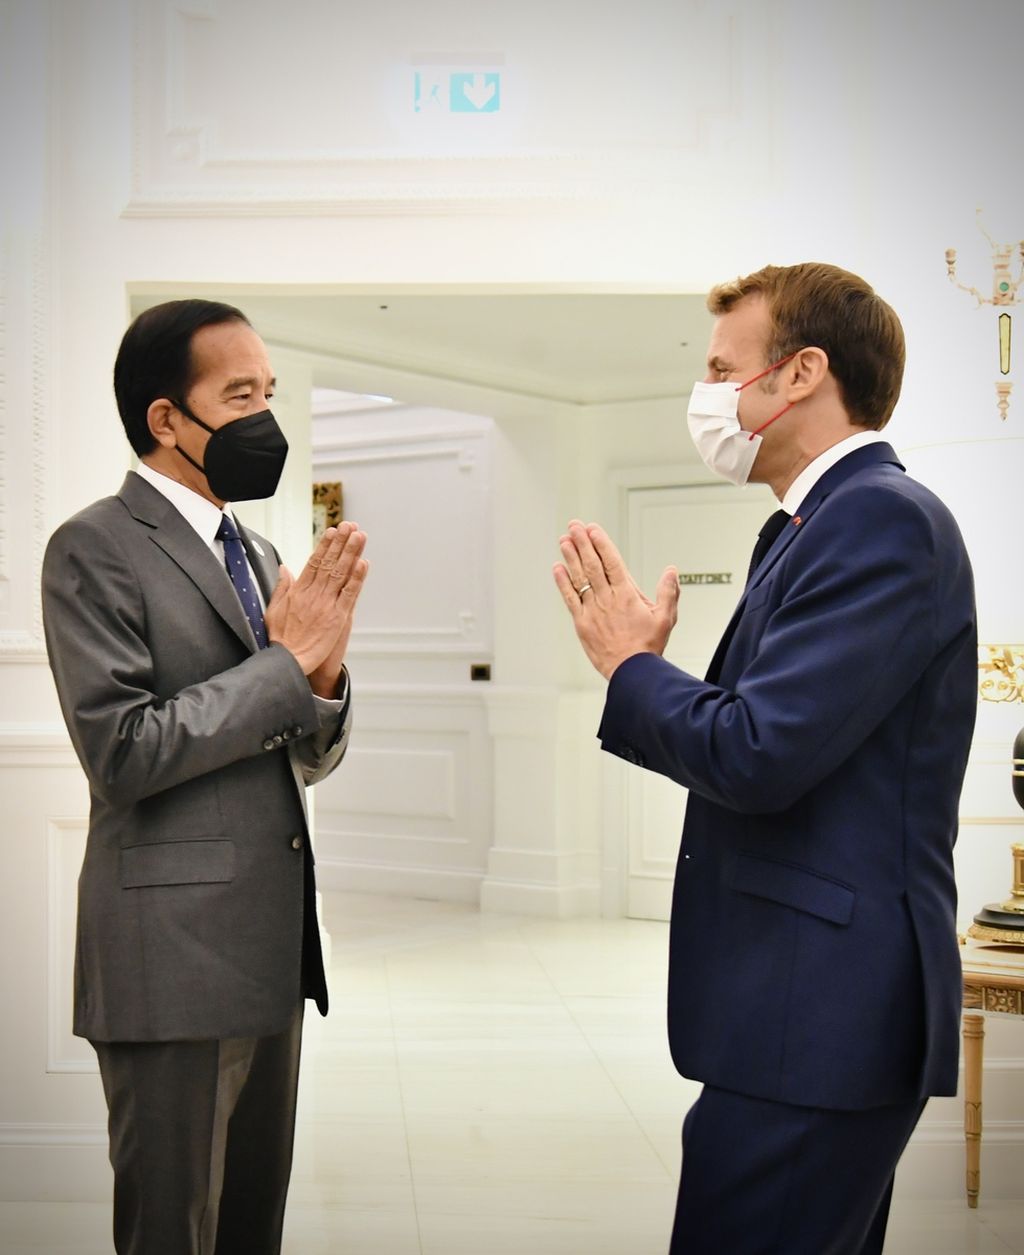 Dalam unggahan ucapan selamat di media sosial, Presiden Jokowi juga turut membagikan foto berdua antara Presiden Jokowi dan Macron saat mengadakan pertemuan bilateral di Hotel Splendide Royal, Roma, Italia, pada Sabtu, 30 Oktober 2021.